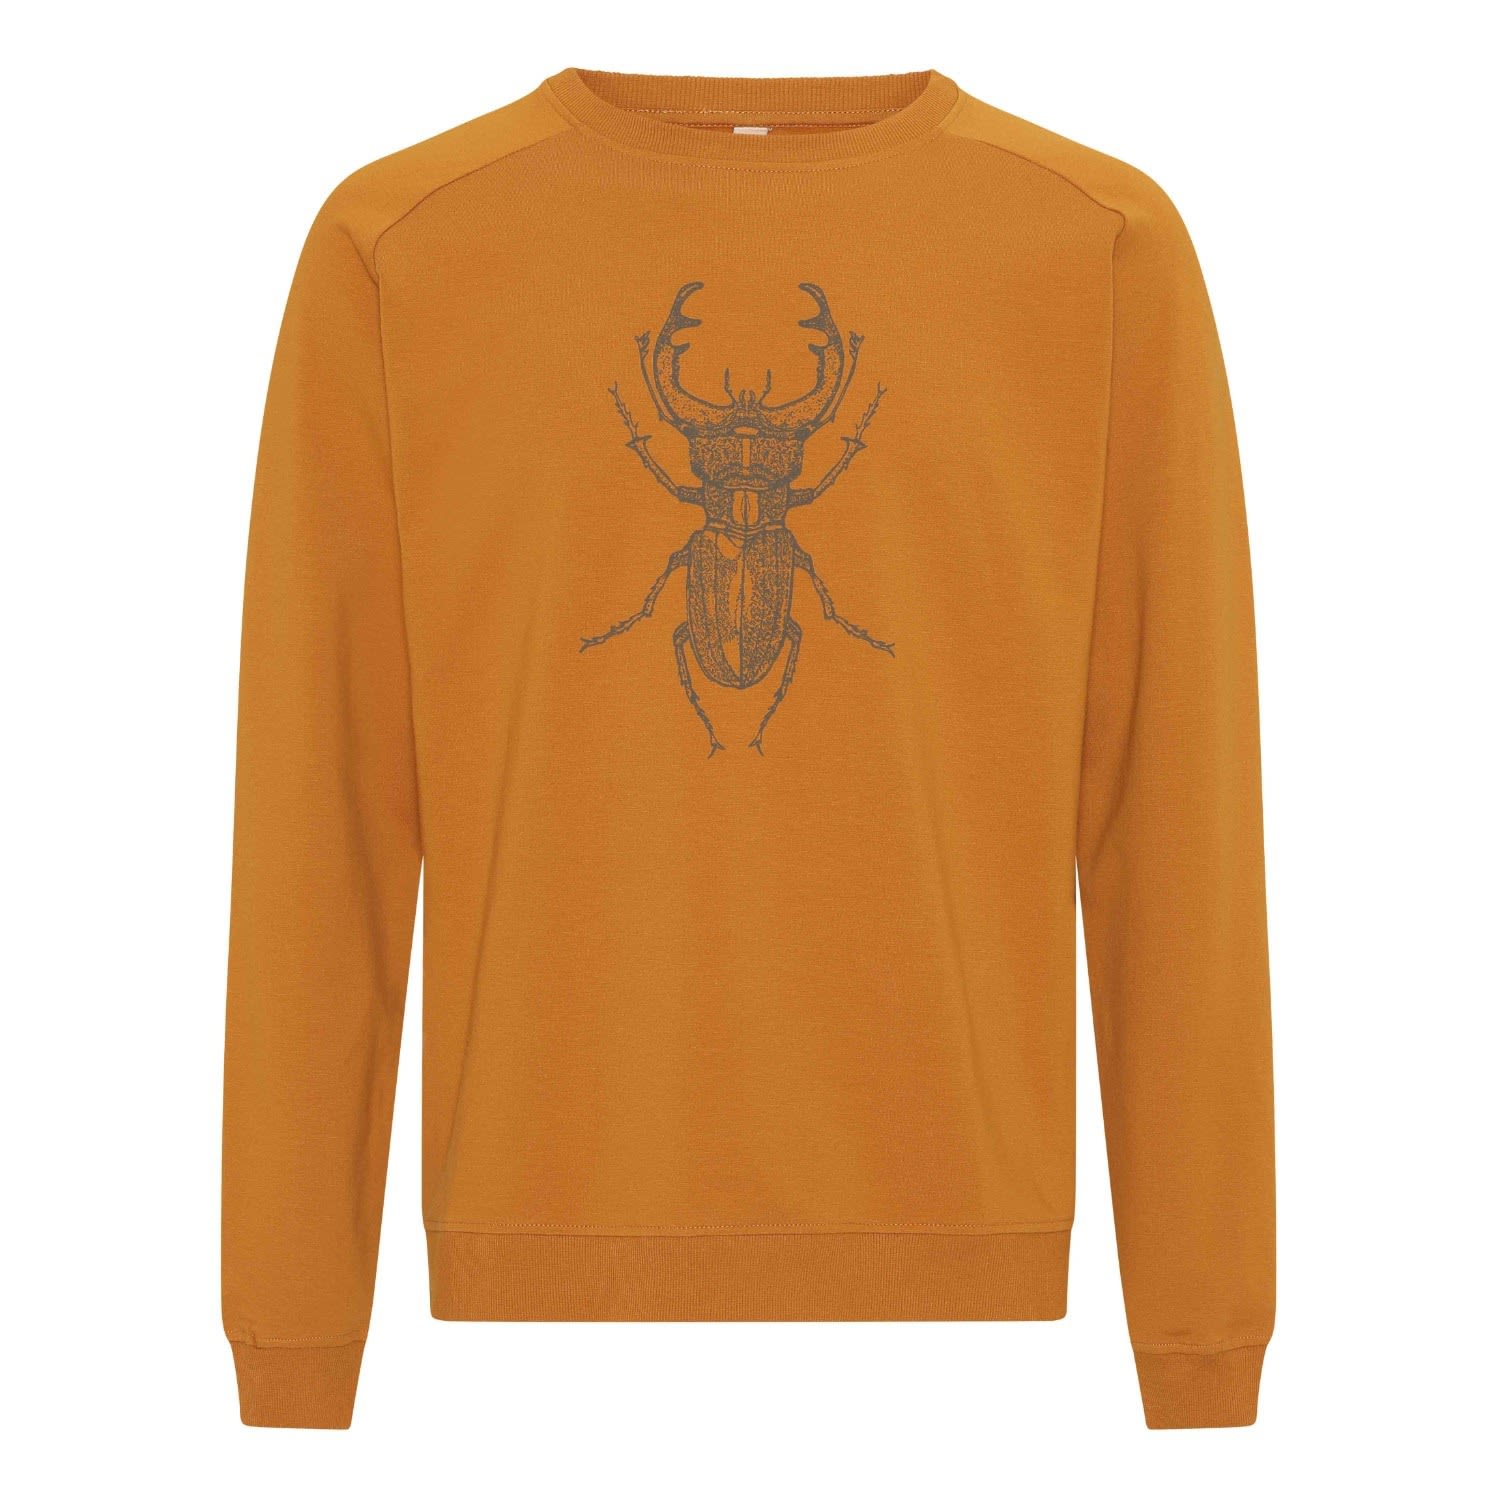 Yellow / Orange The Organic Sweatshirt - Stag Beetle. Small Grobund